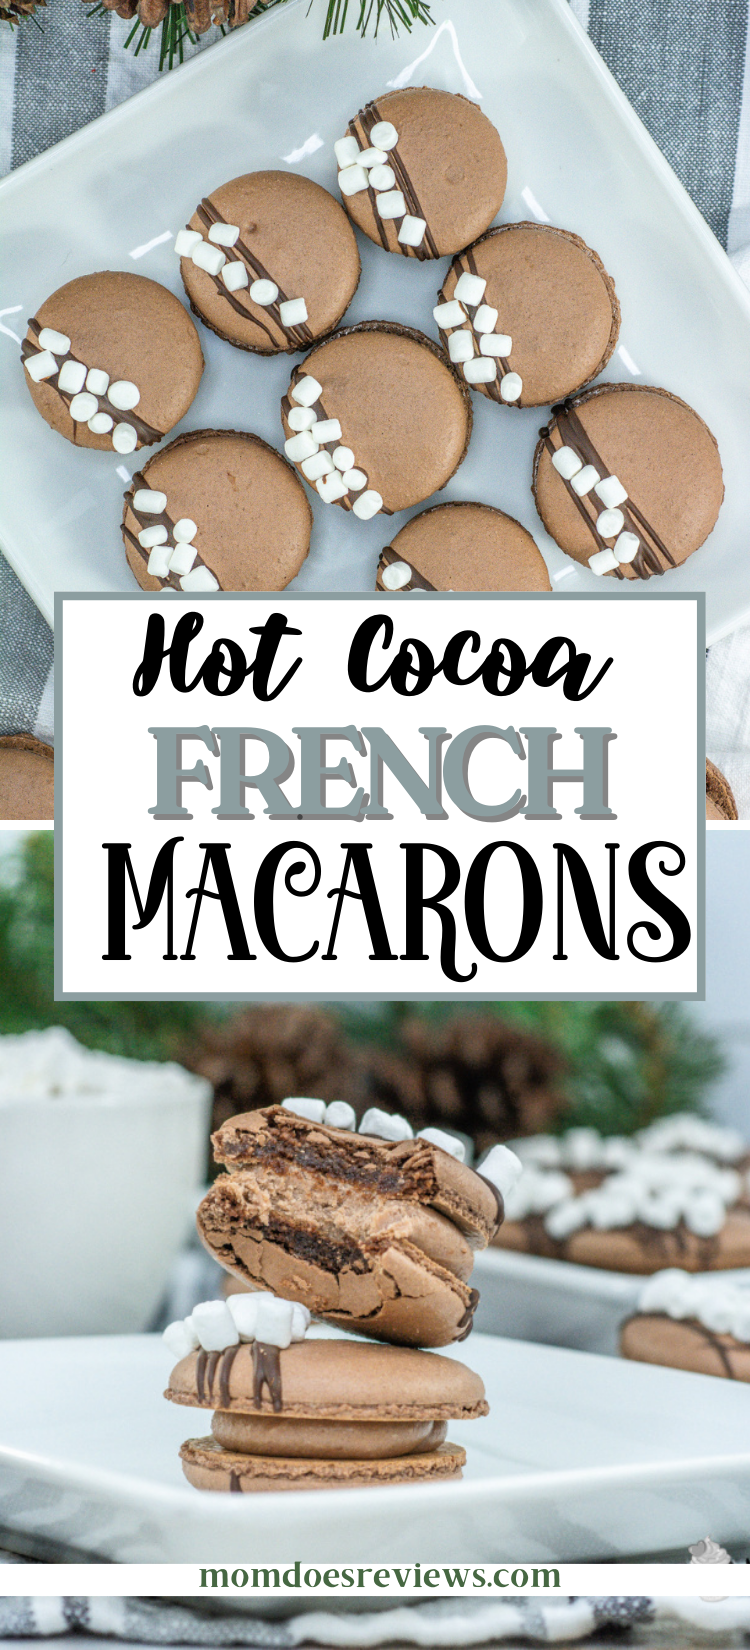 Hot cocoa macarons